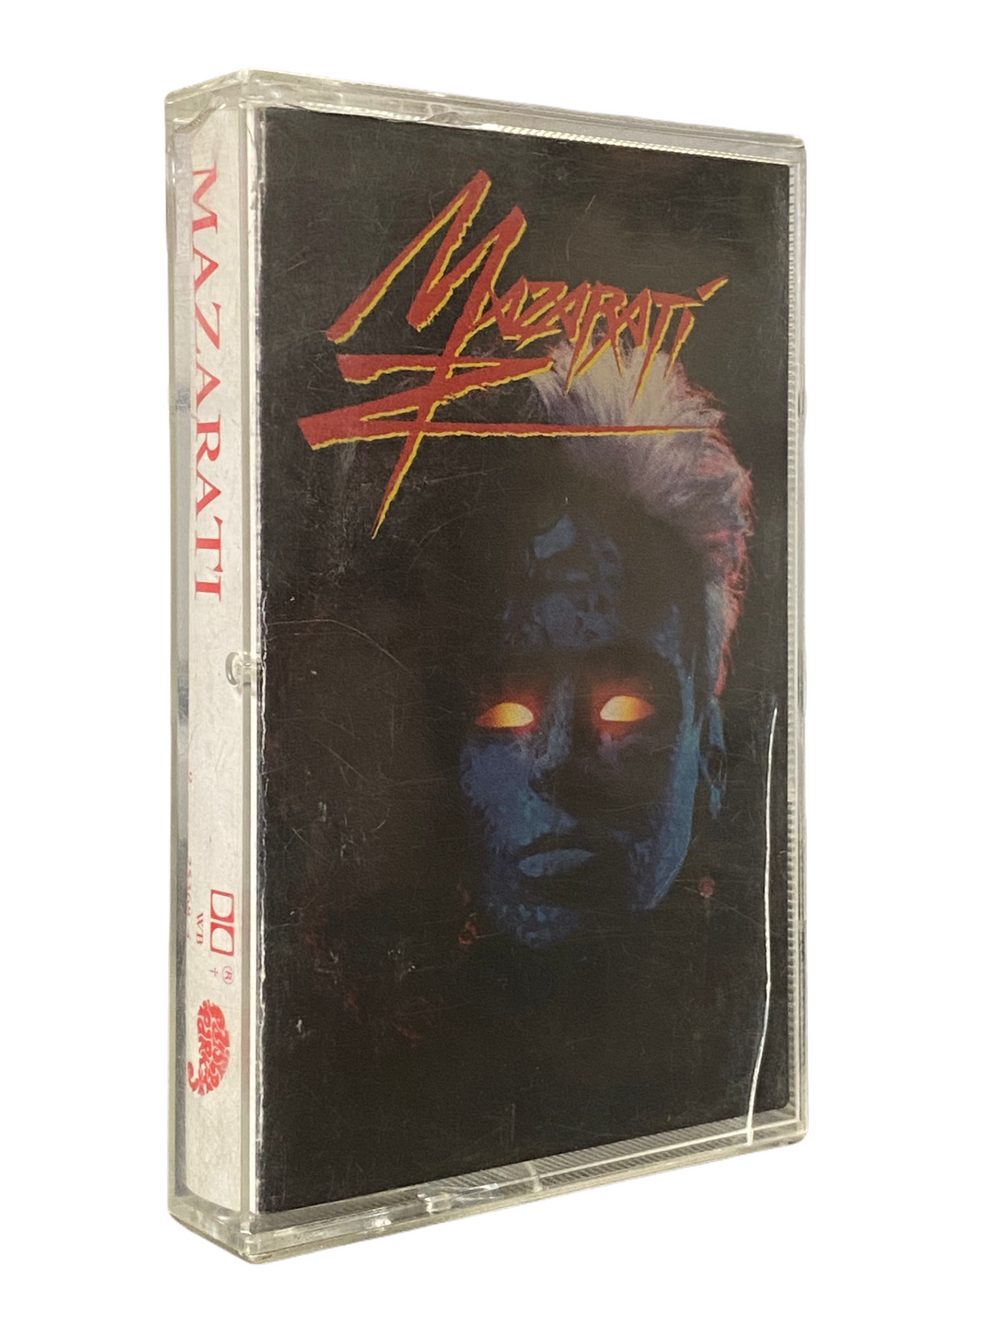 Mazarati Self Titled Tape Cassette Album Original 1986 Release Prince